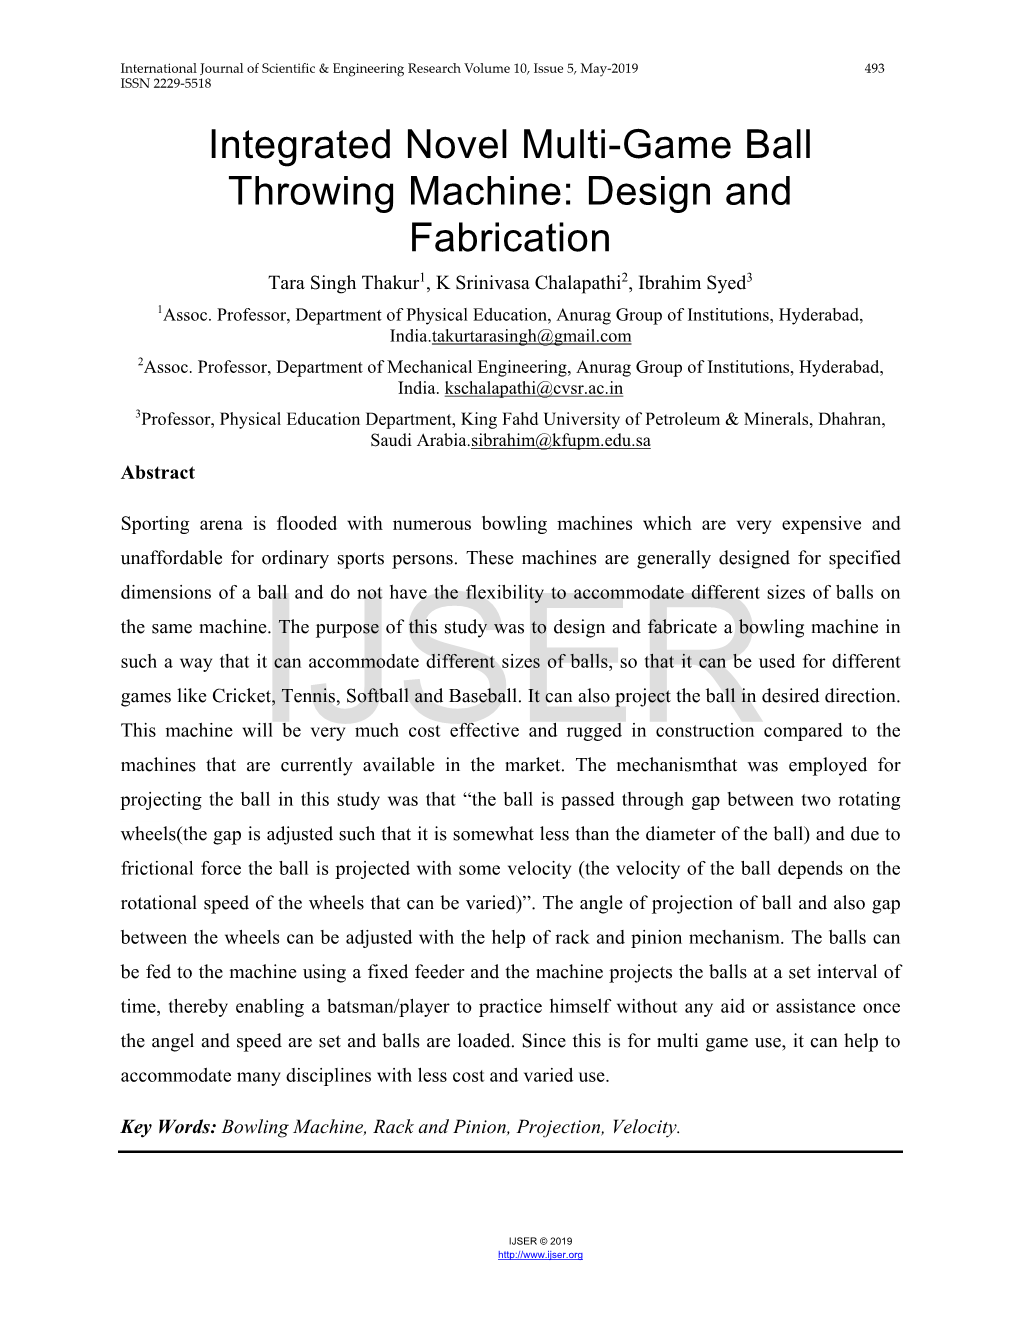 Integrated Novel Multi-Game Ball Throwing Machine: Design and Fabrication Tara Singh Thakur1, K Srinivasa Chalapathi2, Ibrahim Syed3 1Assoc